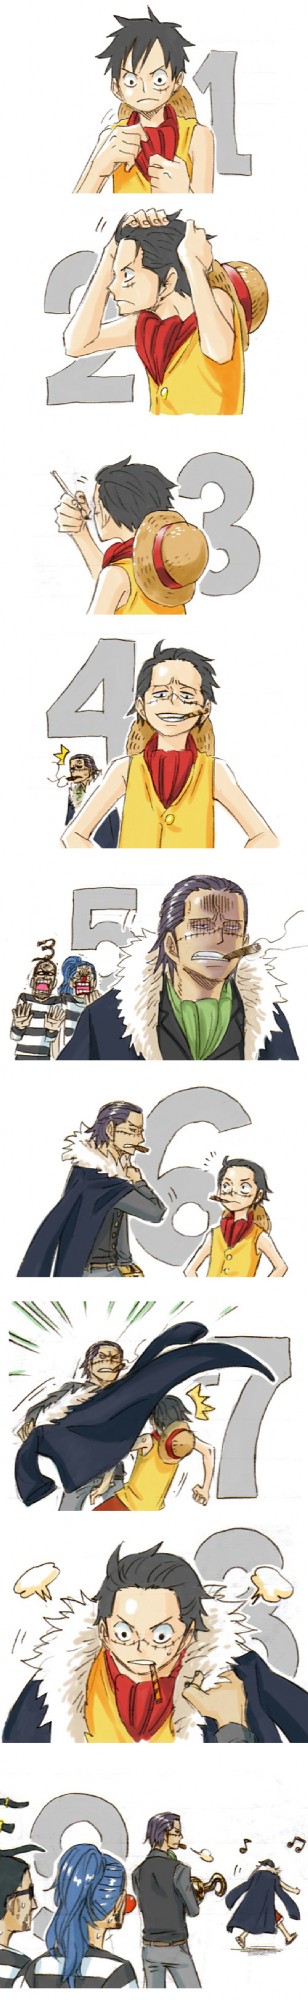 One Piece Funny Pics - Seite 7 Ifyoug10